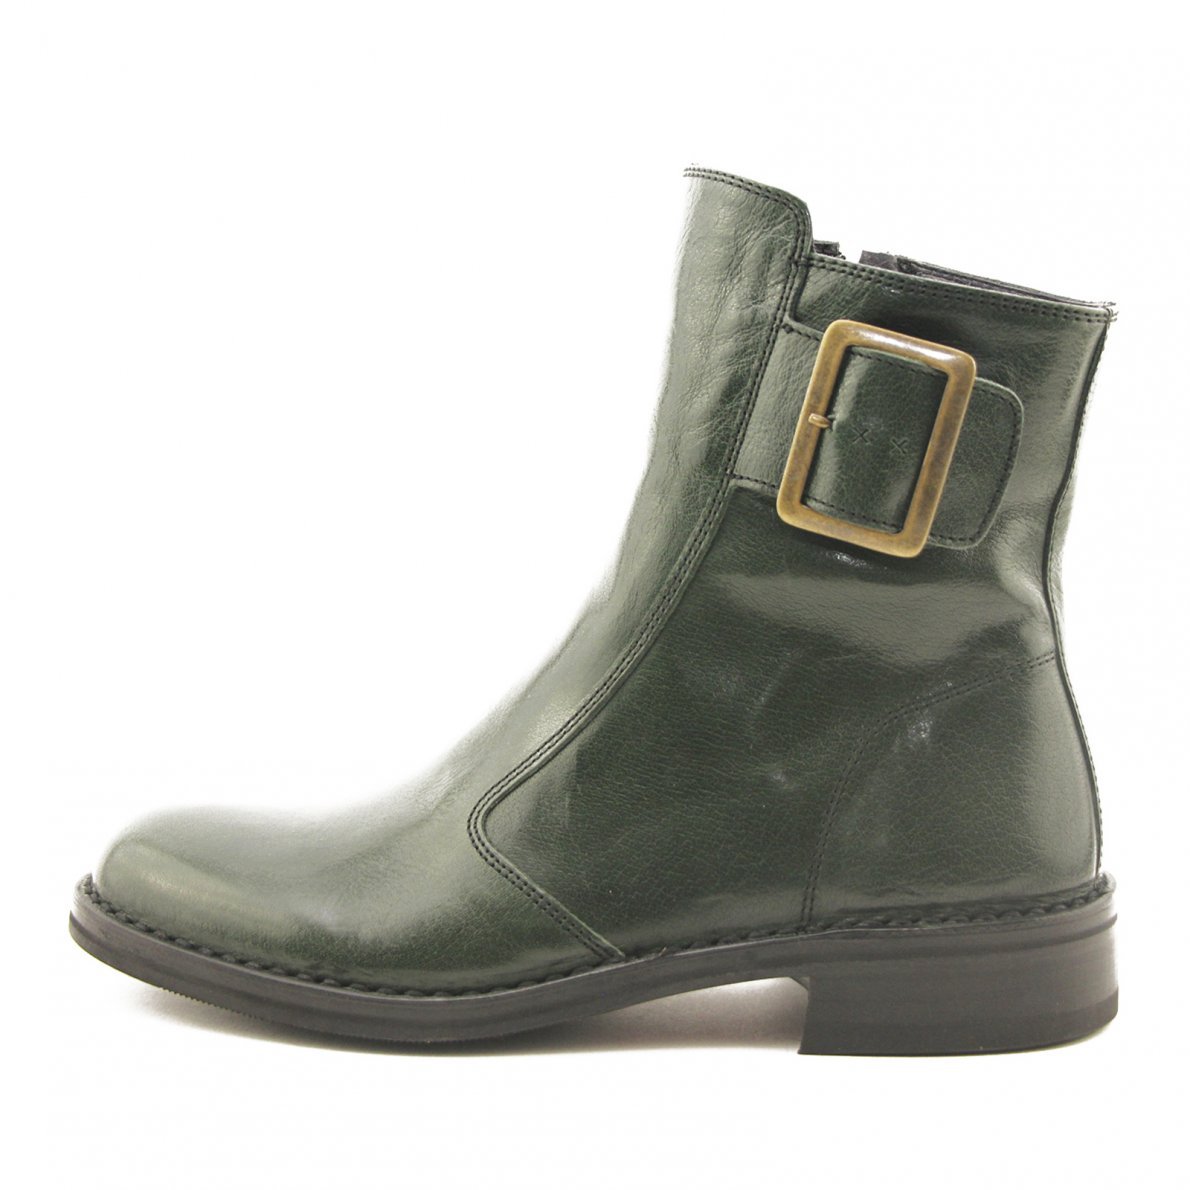 støvle, grøn Bubetti - sko